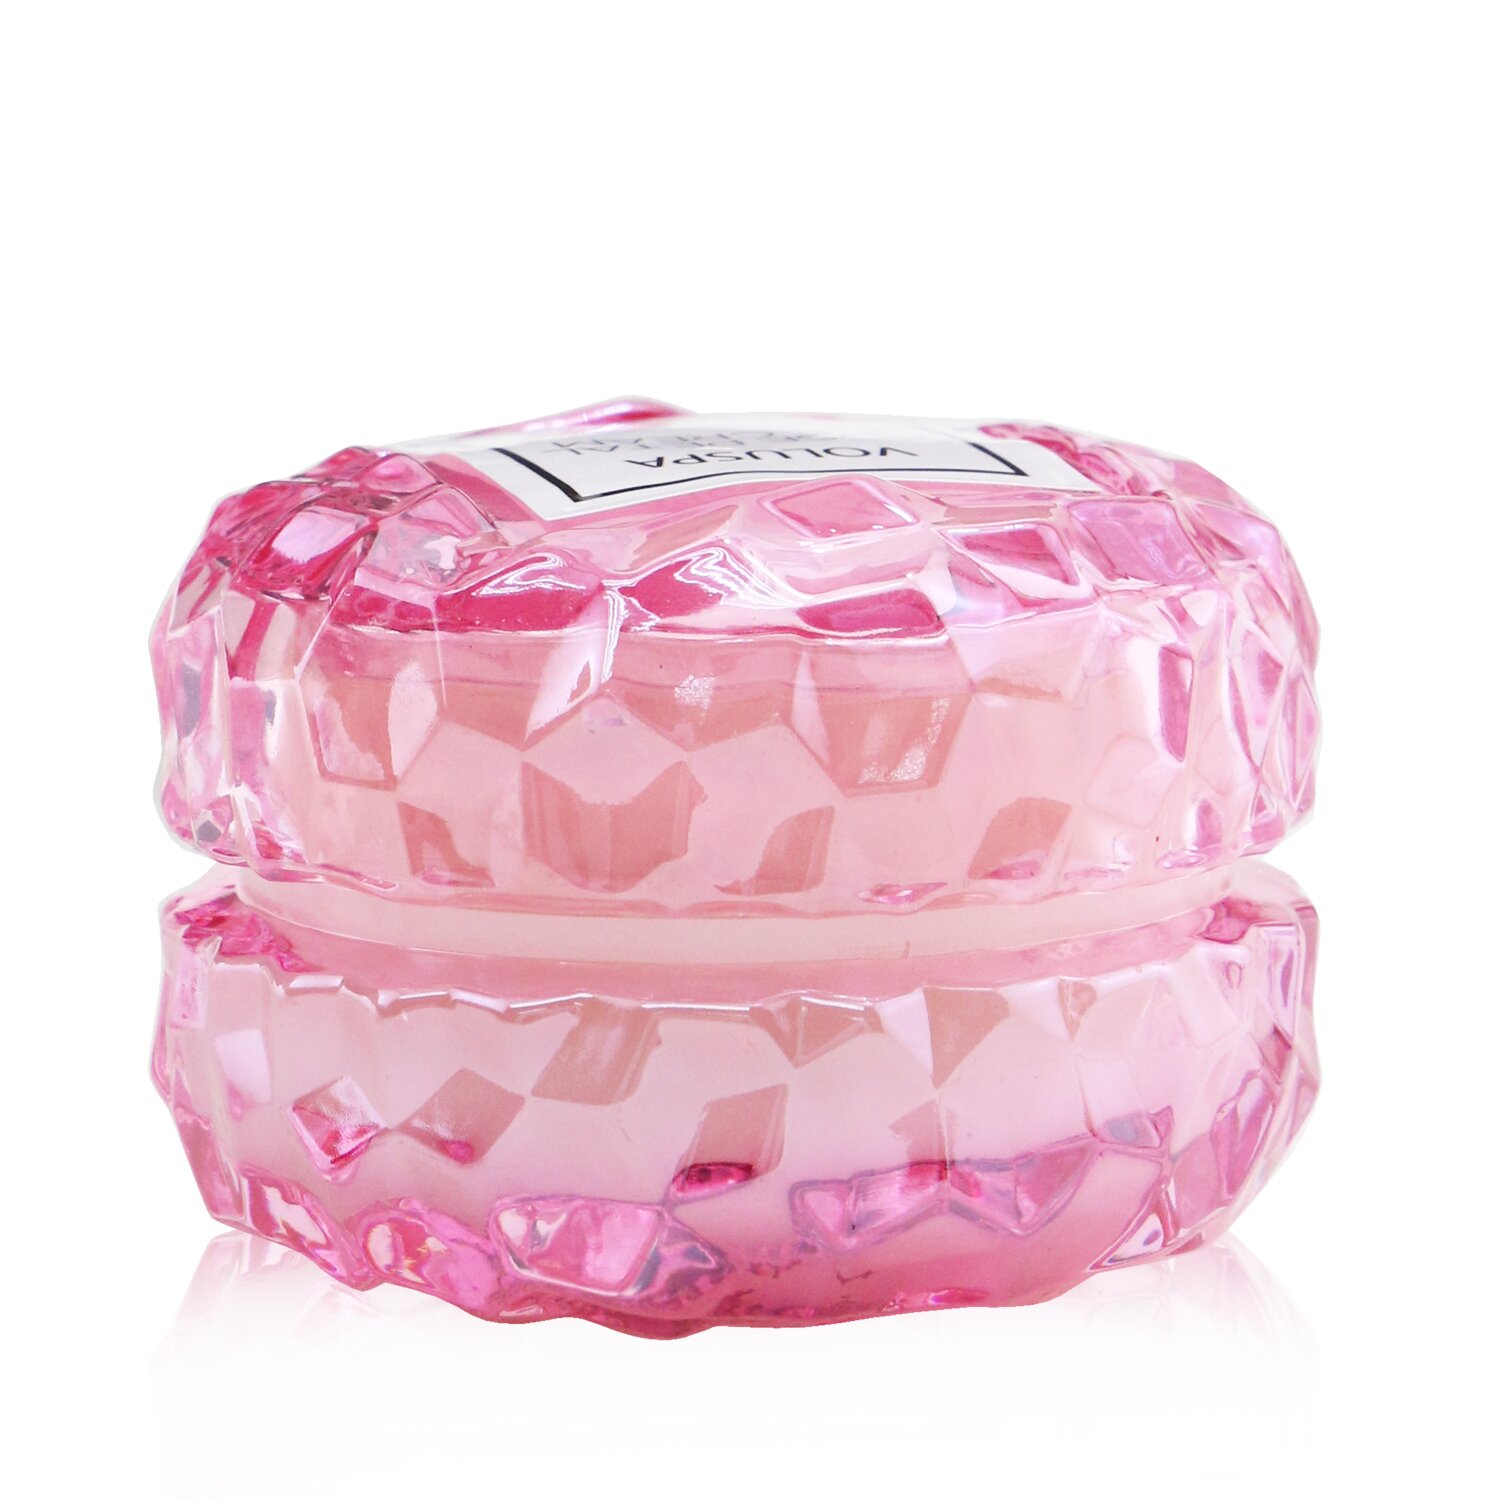 Voluspa Macaron Candle - Rose Petal Ice Cream 51g/1.8oz